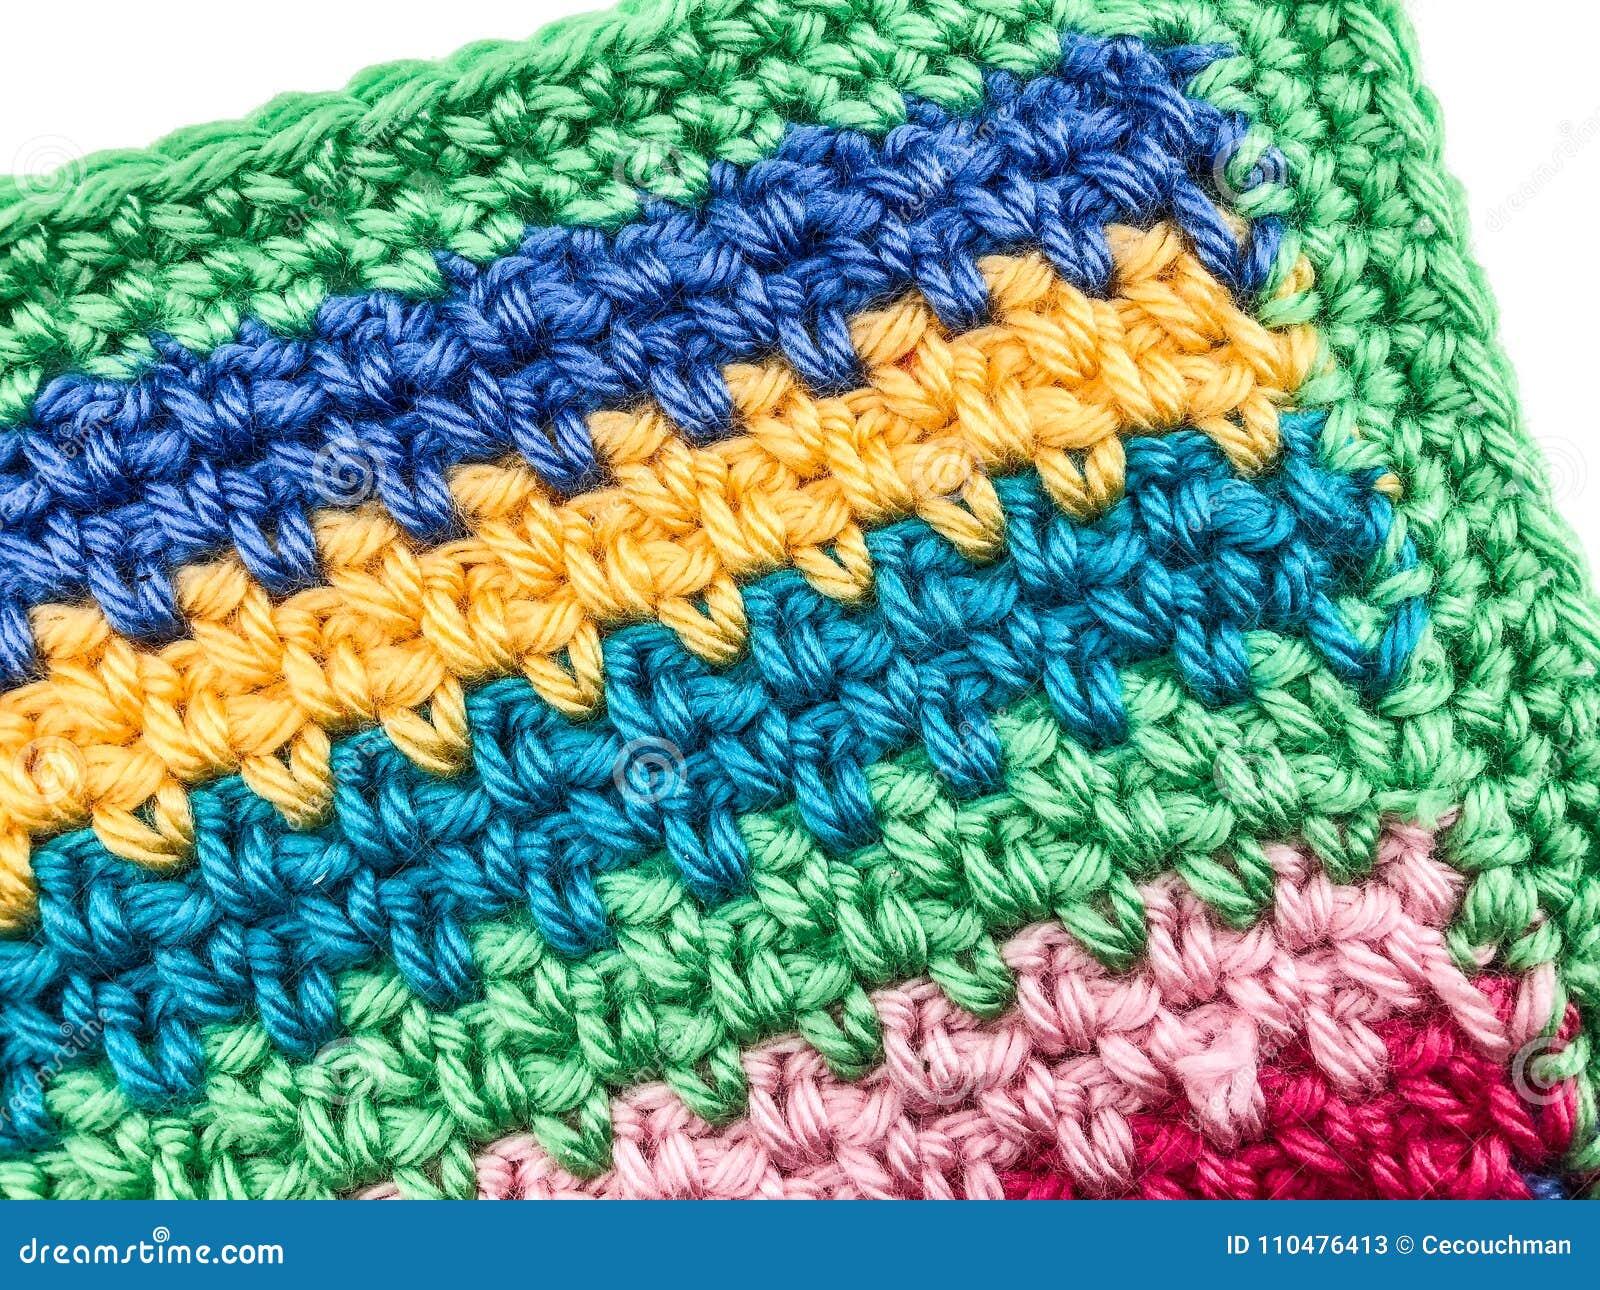 Granite Stitch Placemat Crochet Pattern  PDF Instant Download  Checkered stripes